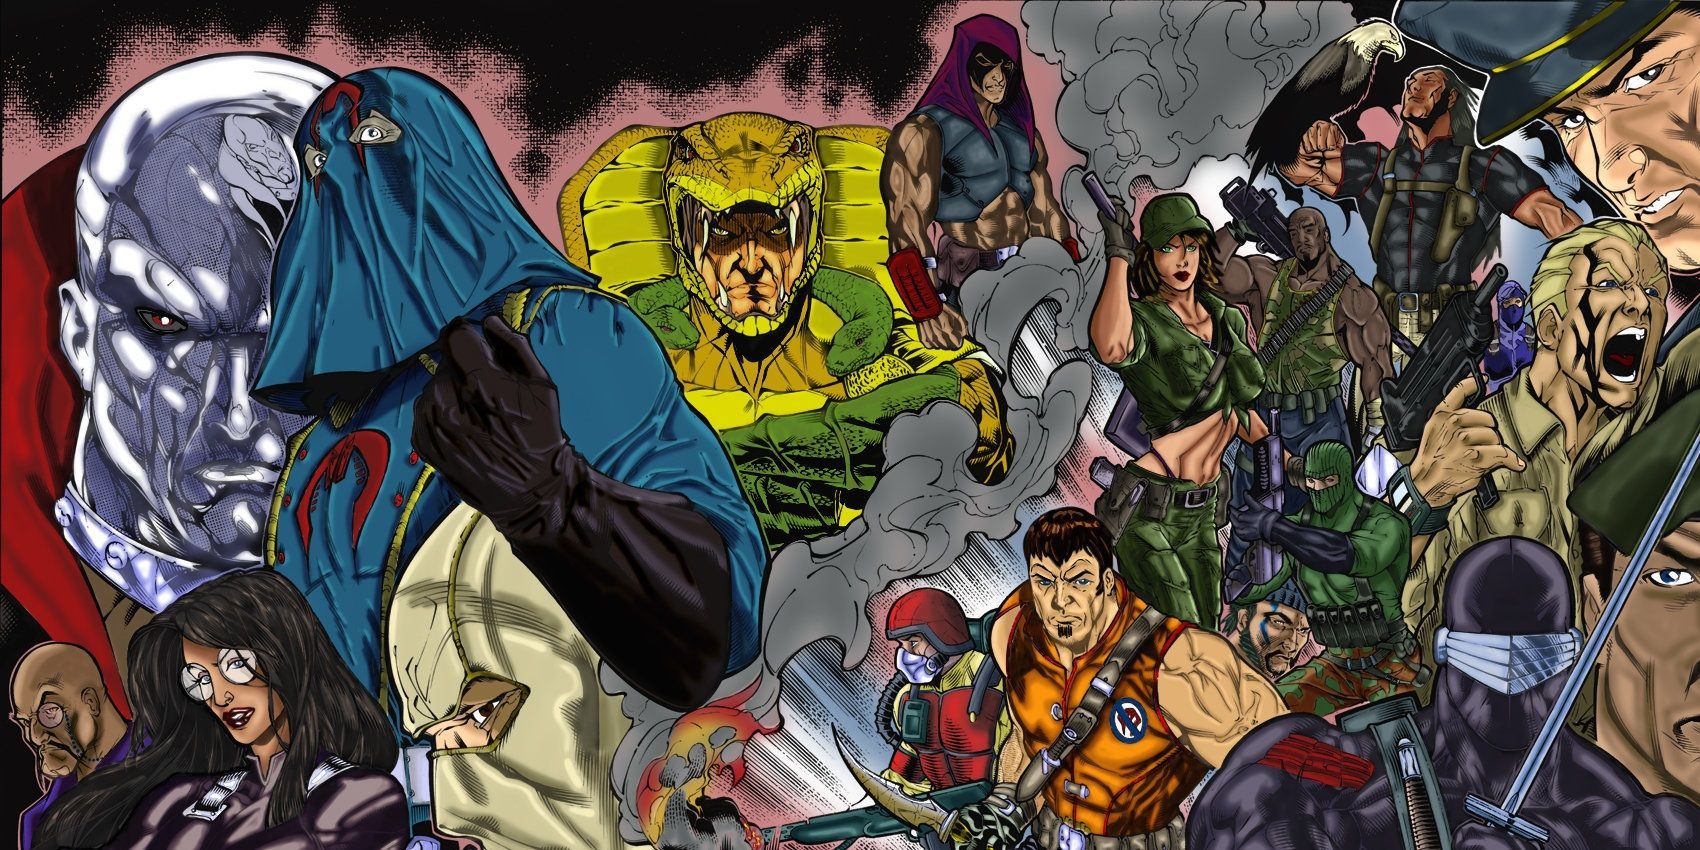 Cobra Civil War collage, depicting various villains from G.I. Joe